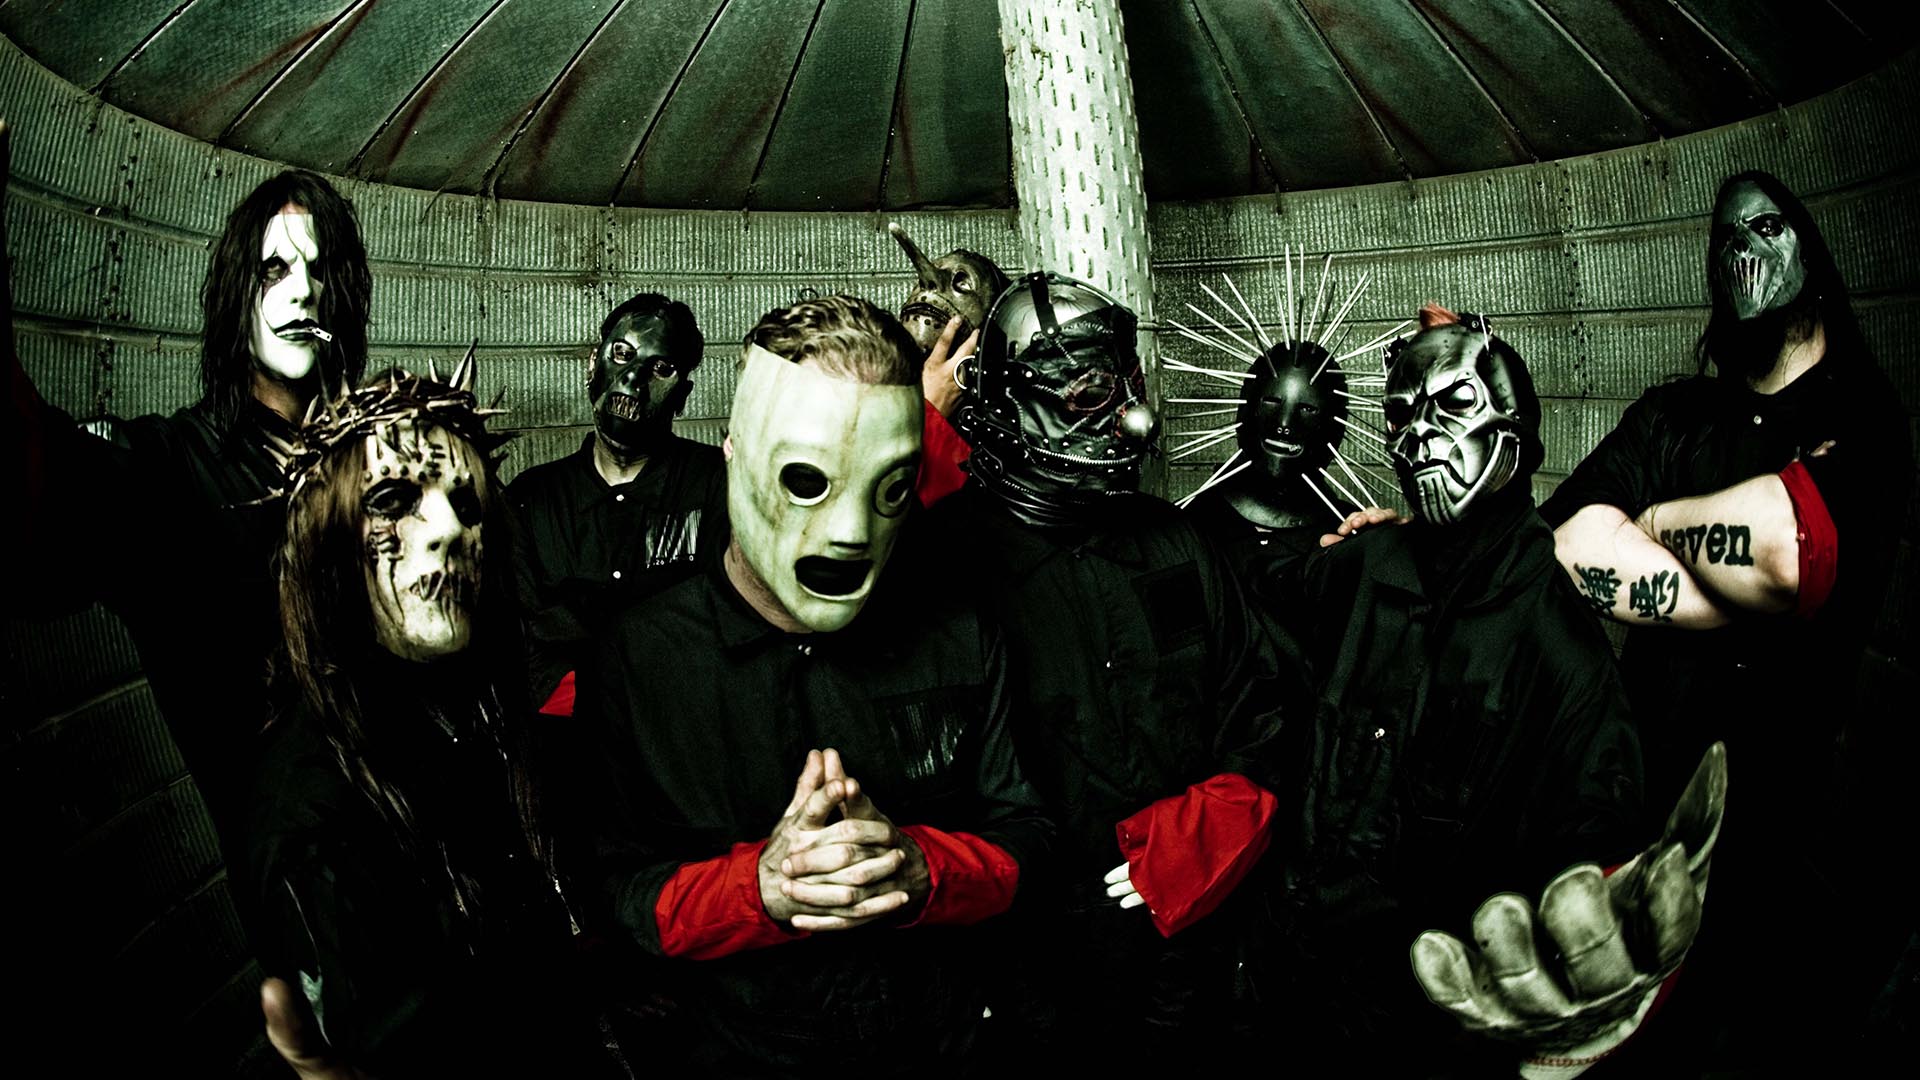 Quinto disco de estudio de Slipknot